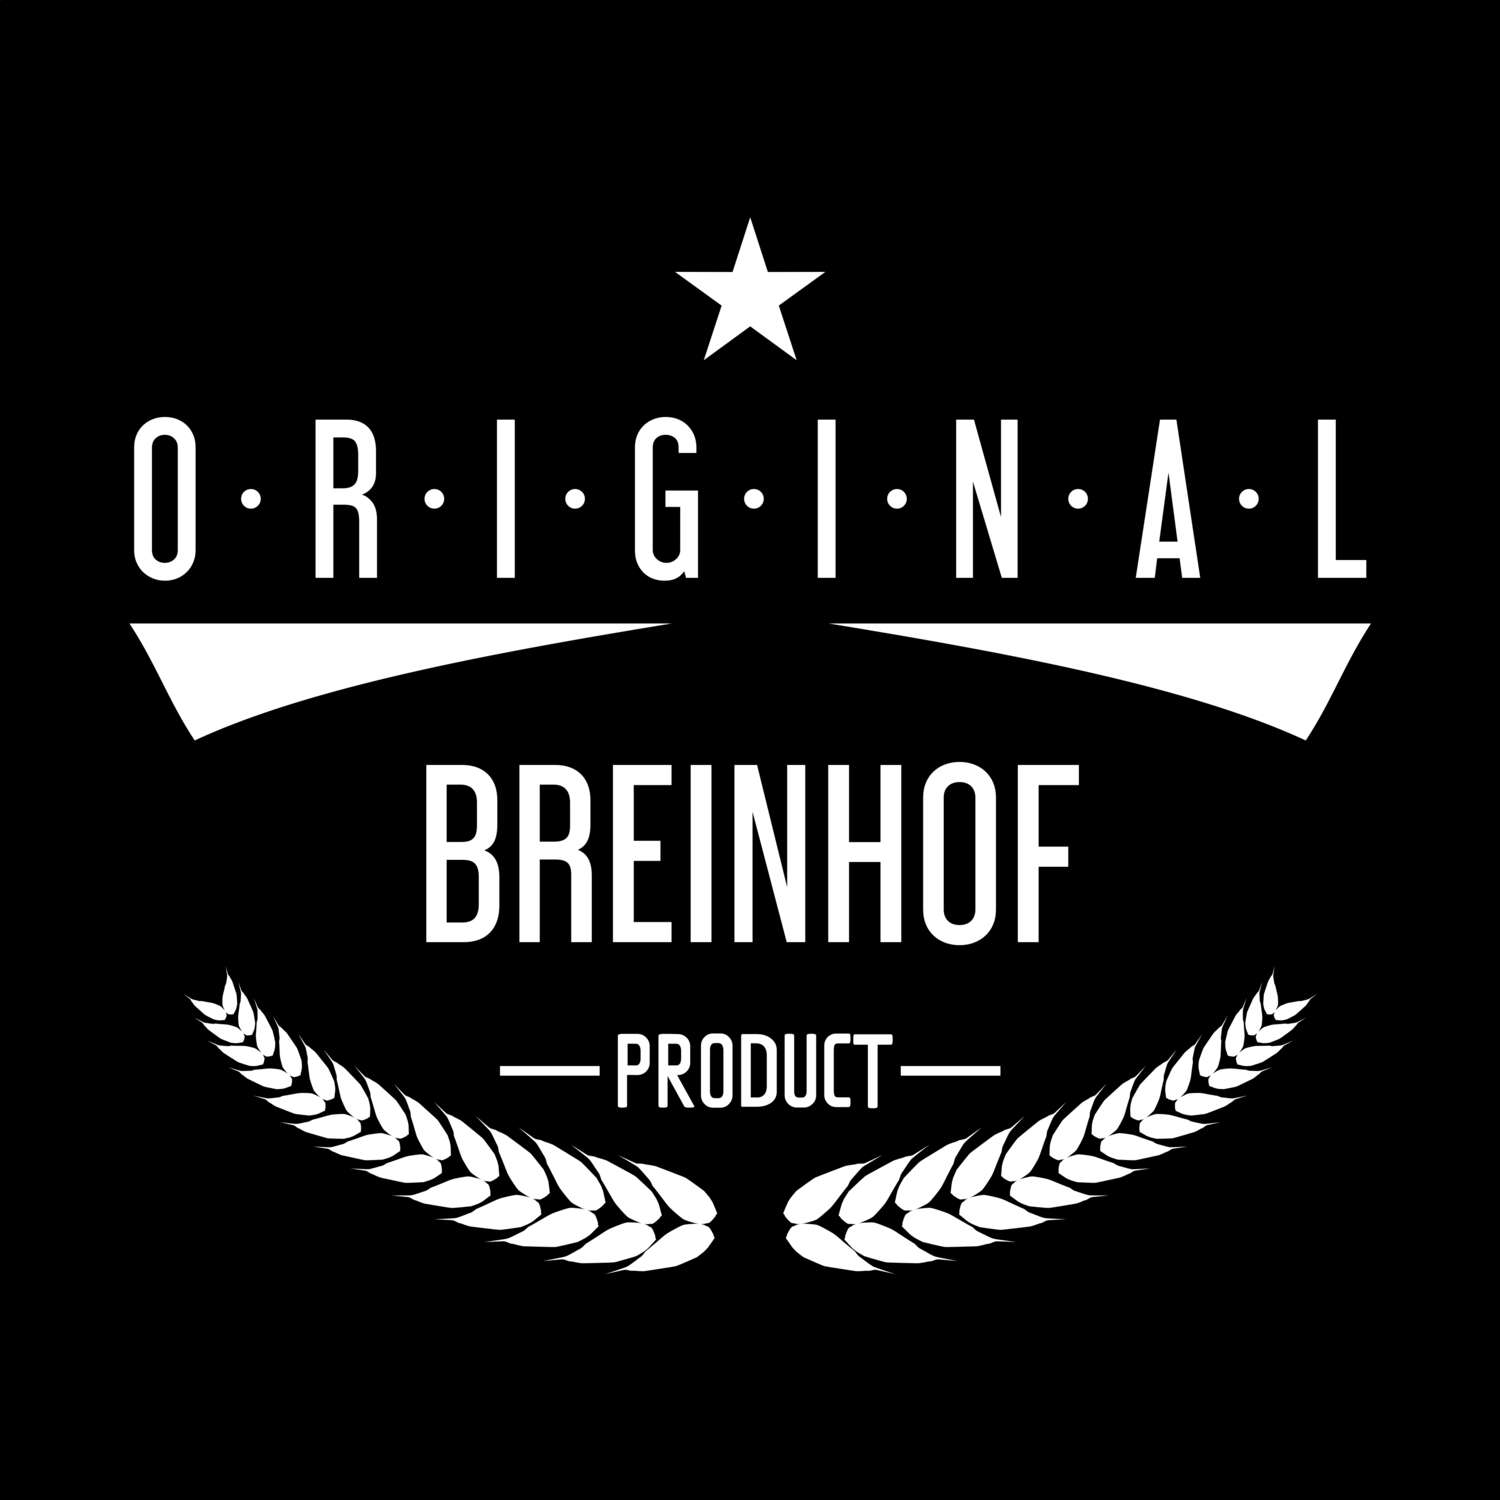 Breinhof T-Shirt »Original Product«